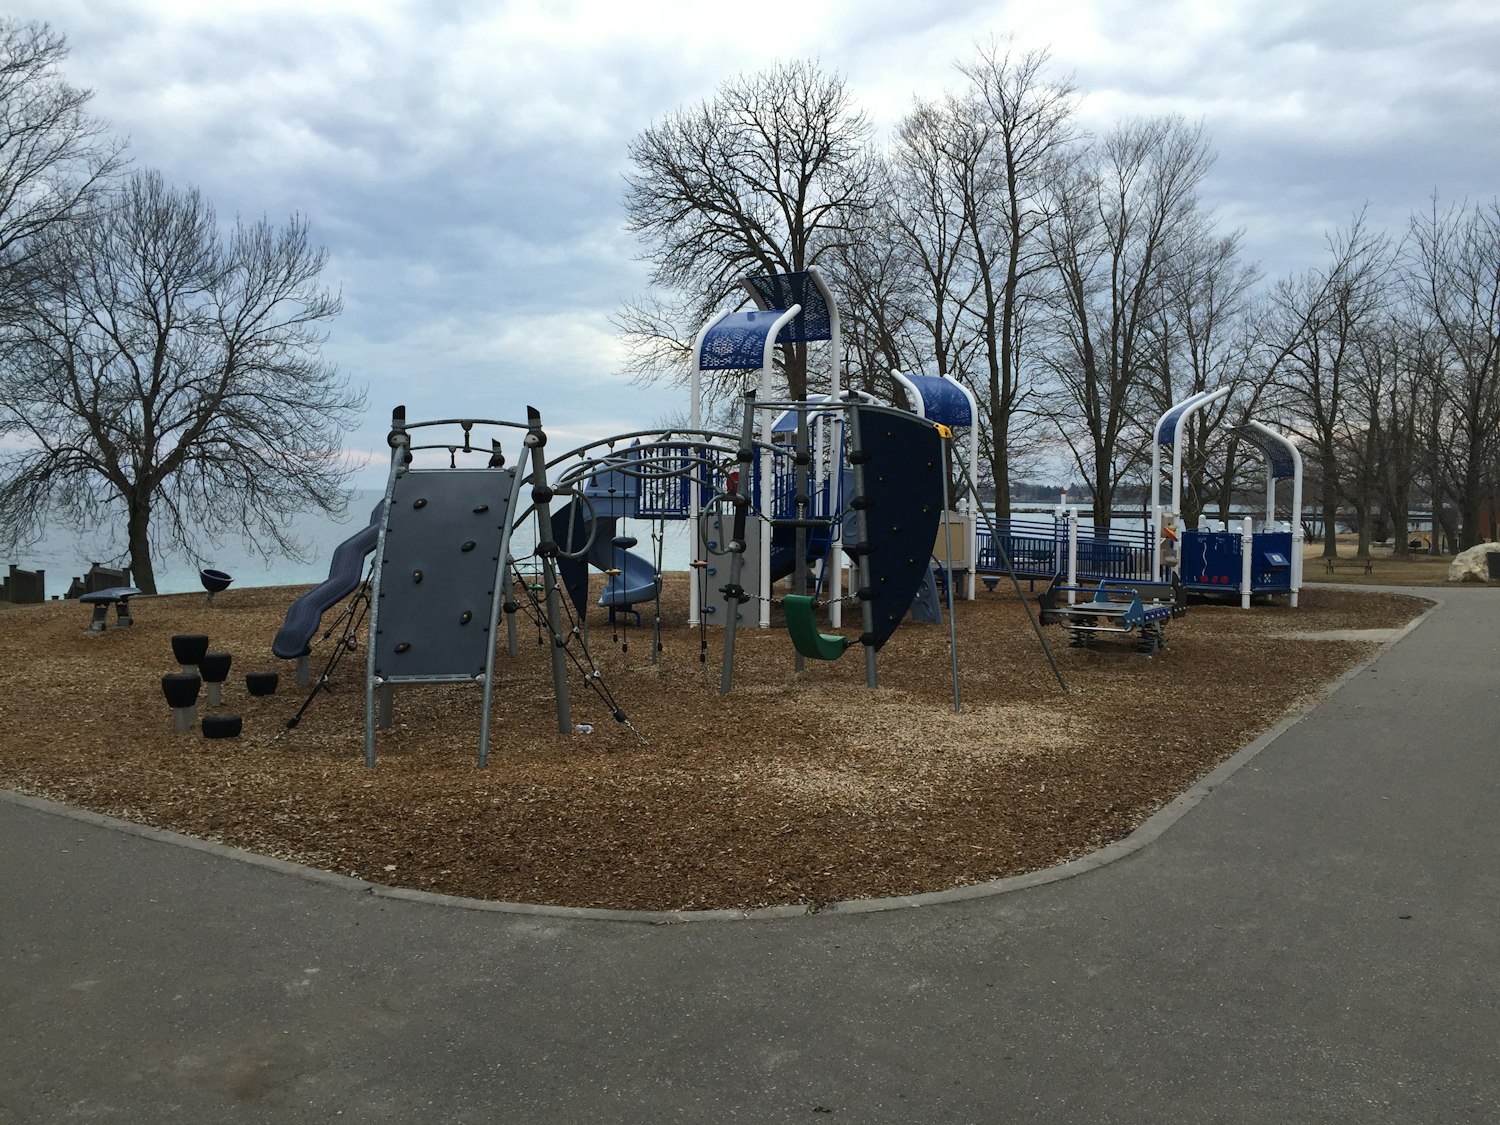 Image illustrating ground based and physical based playground equipment design